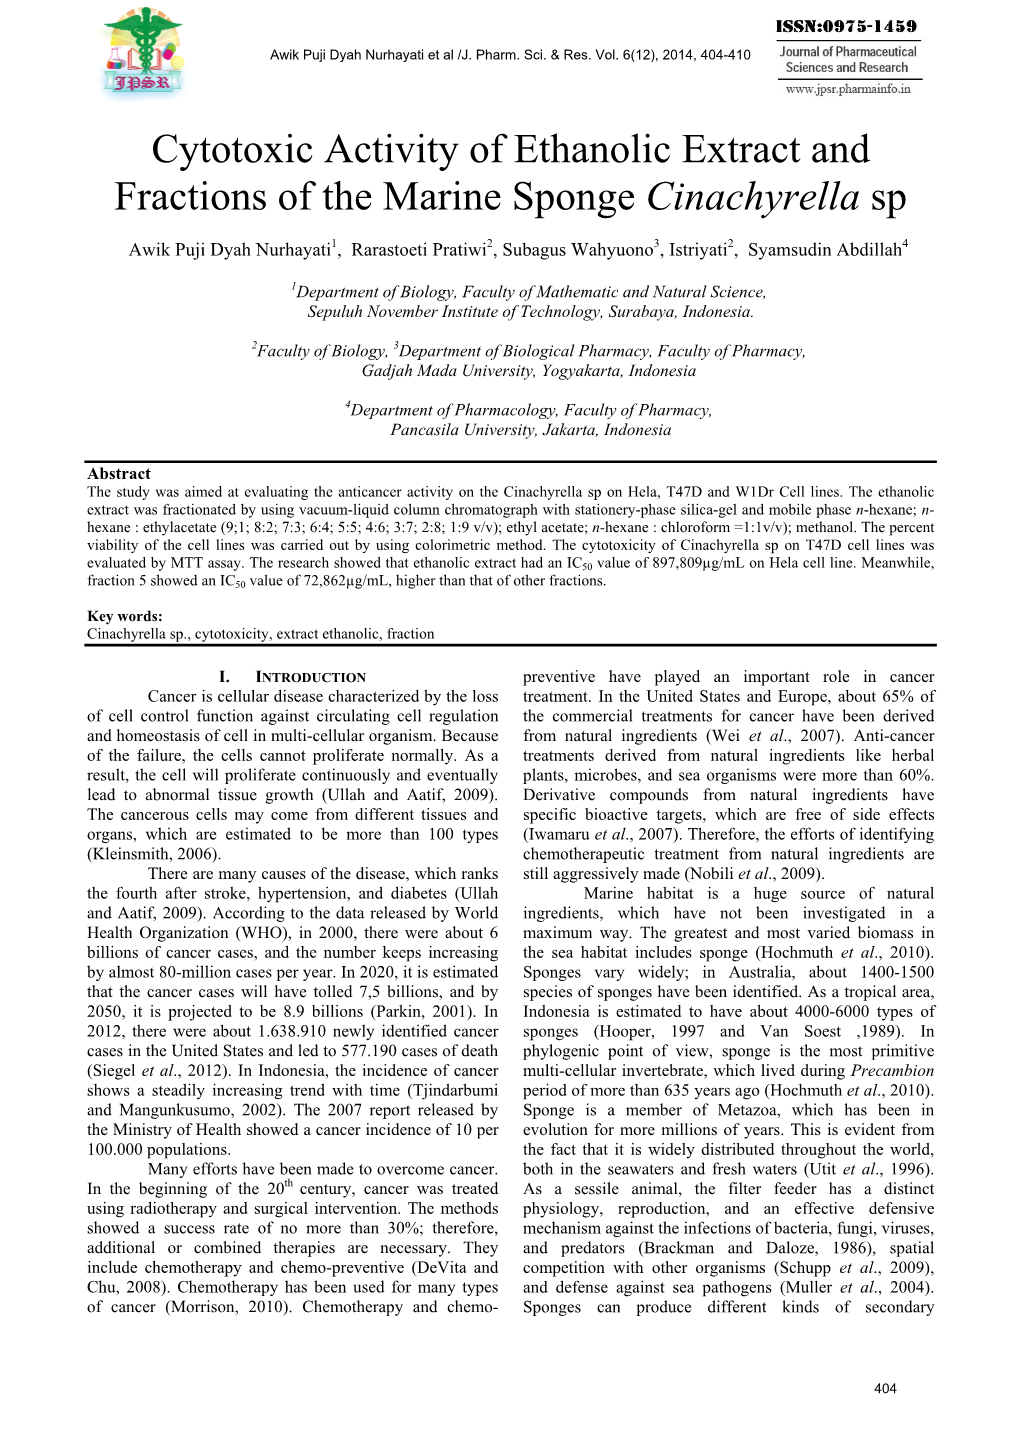 Cytotoxic Activity of Ethanolic Extract and Fractions of the Marine Sponge Cinachyrella Sp